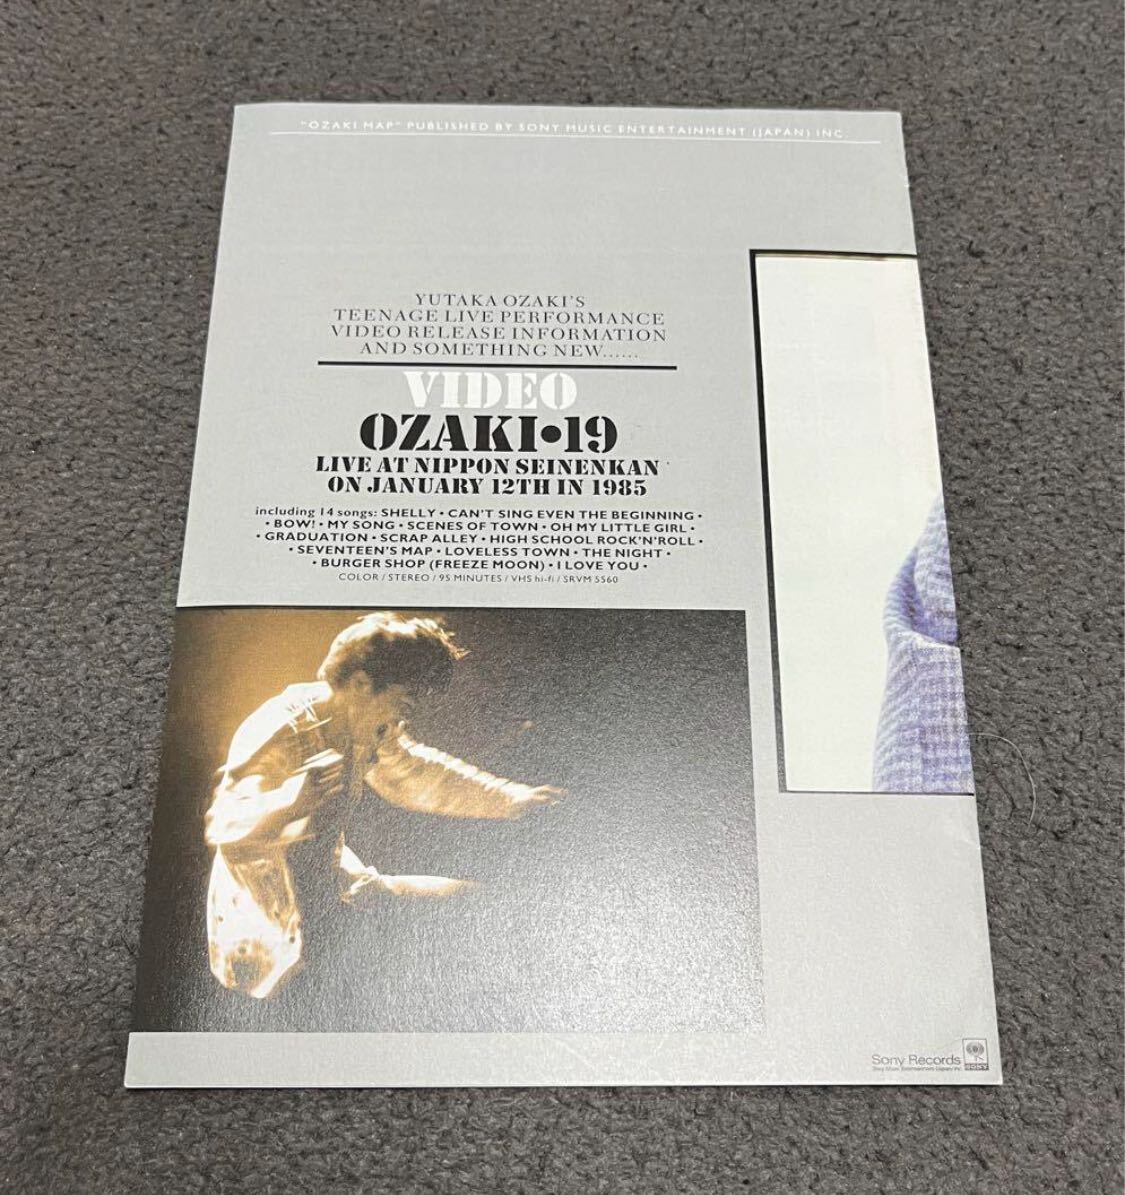  Ozaki Yutaka OZAKI MAP 1st issue брошюра обложка журнал Flyer буклет 